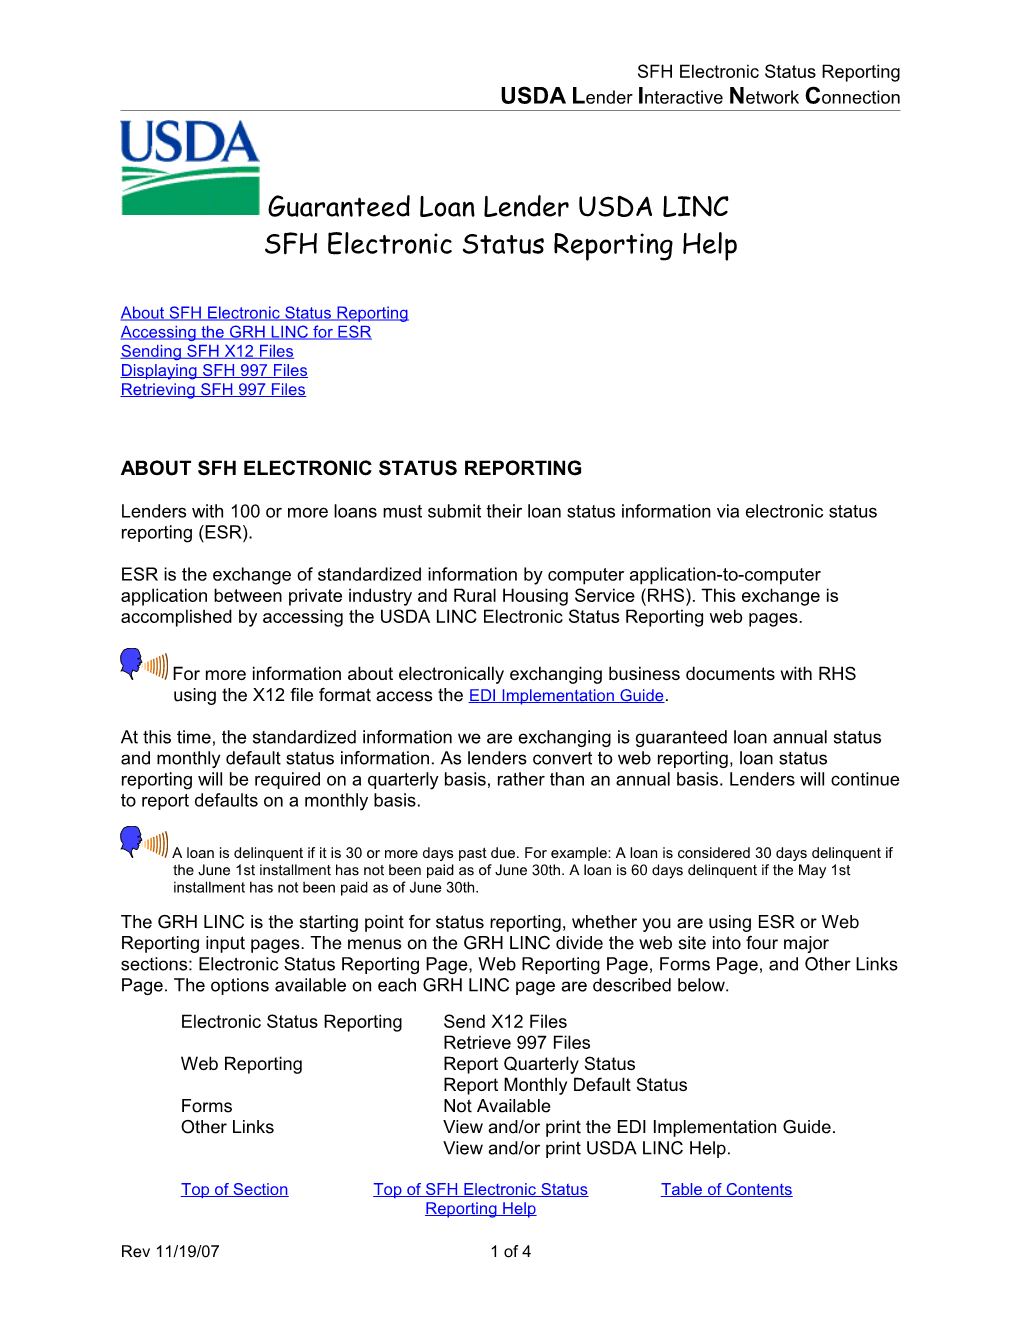 Guaranteed Loan Lender USDA LINC